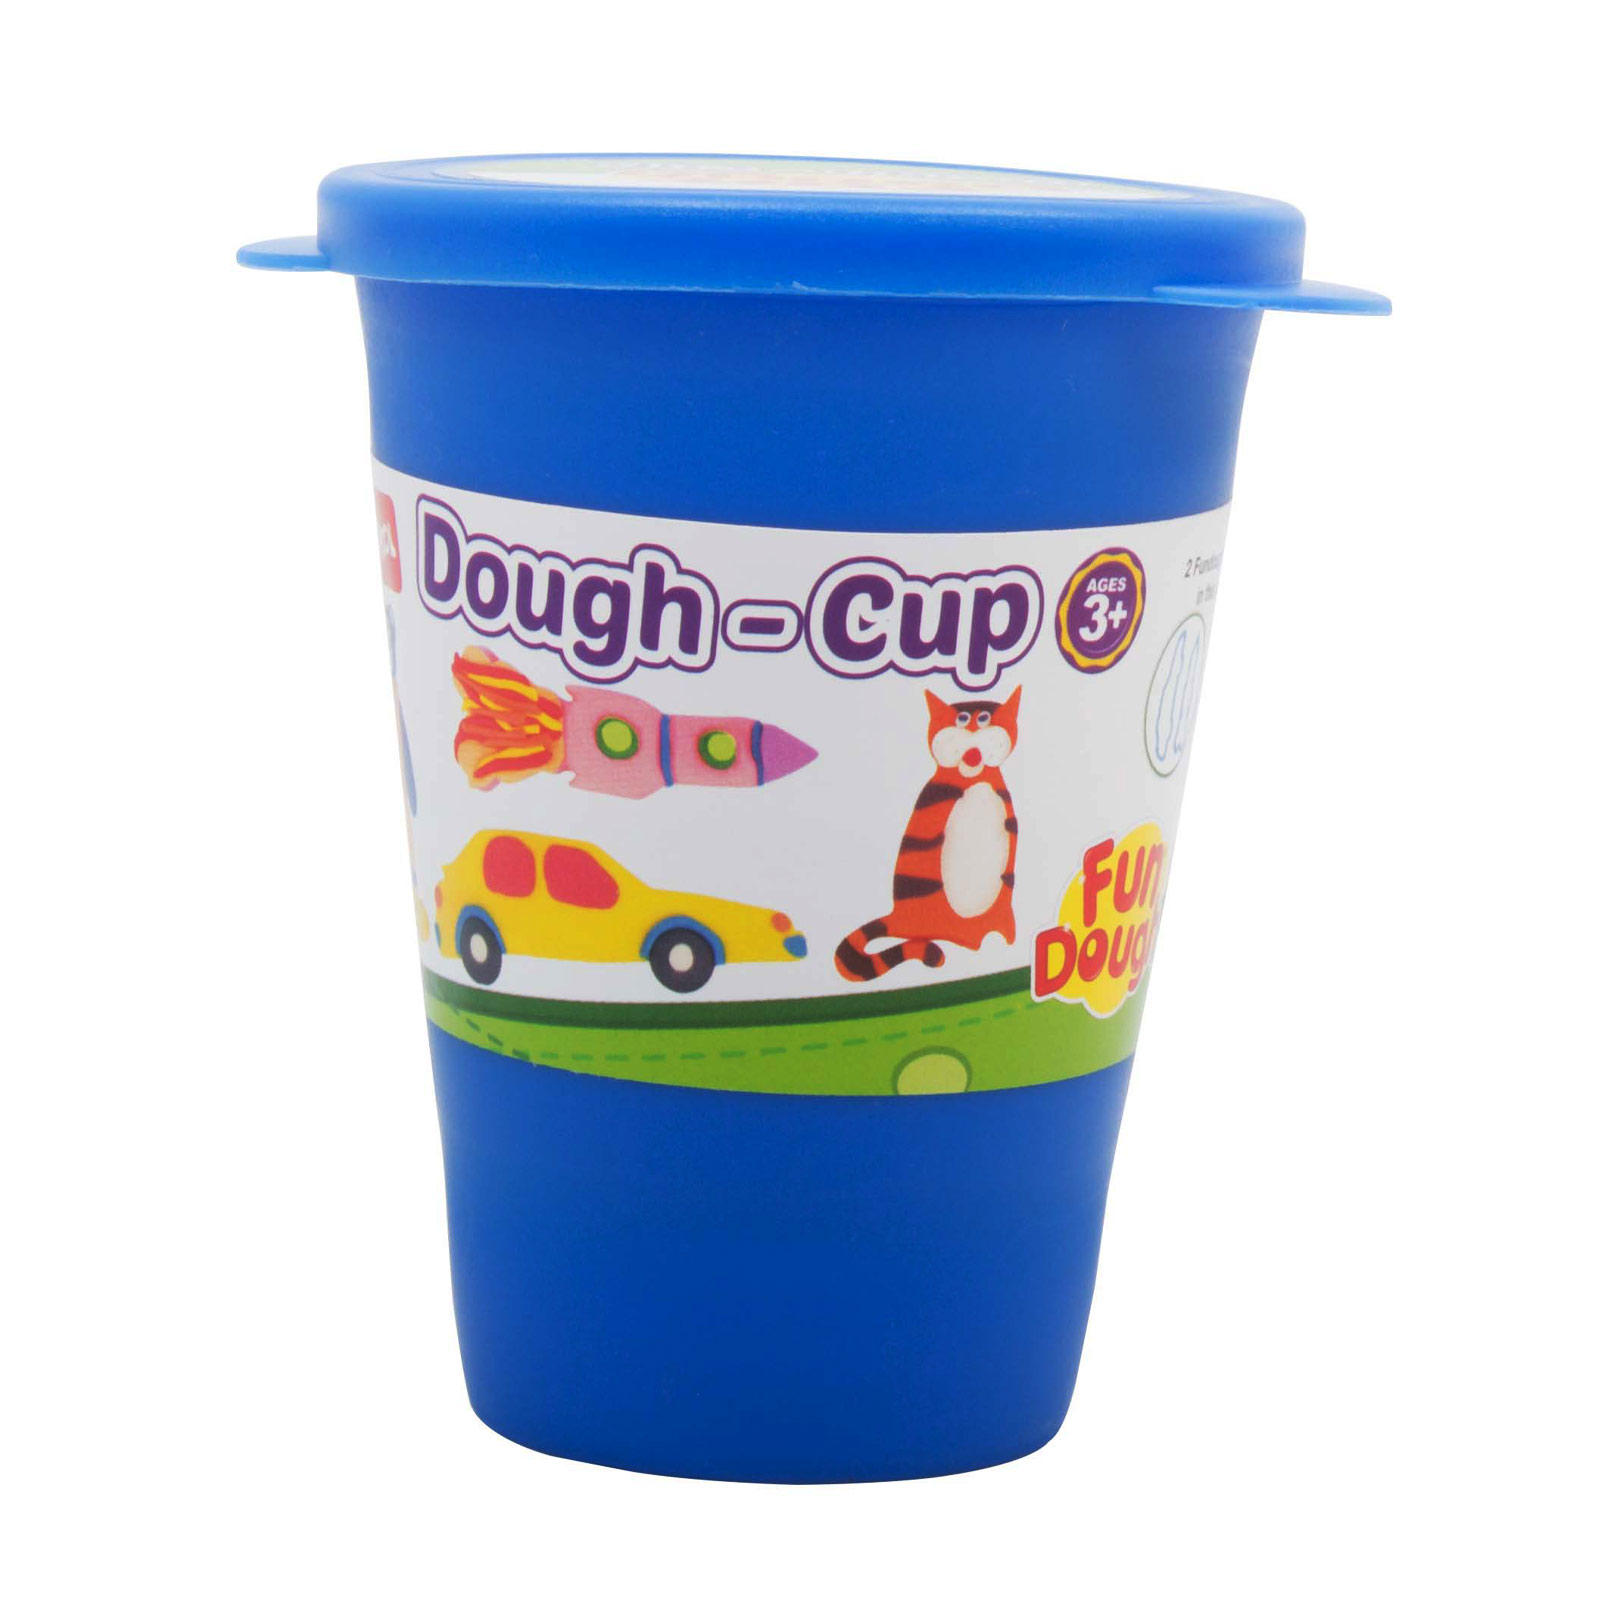 Dough Cup